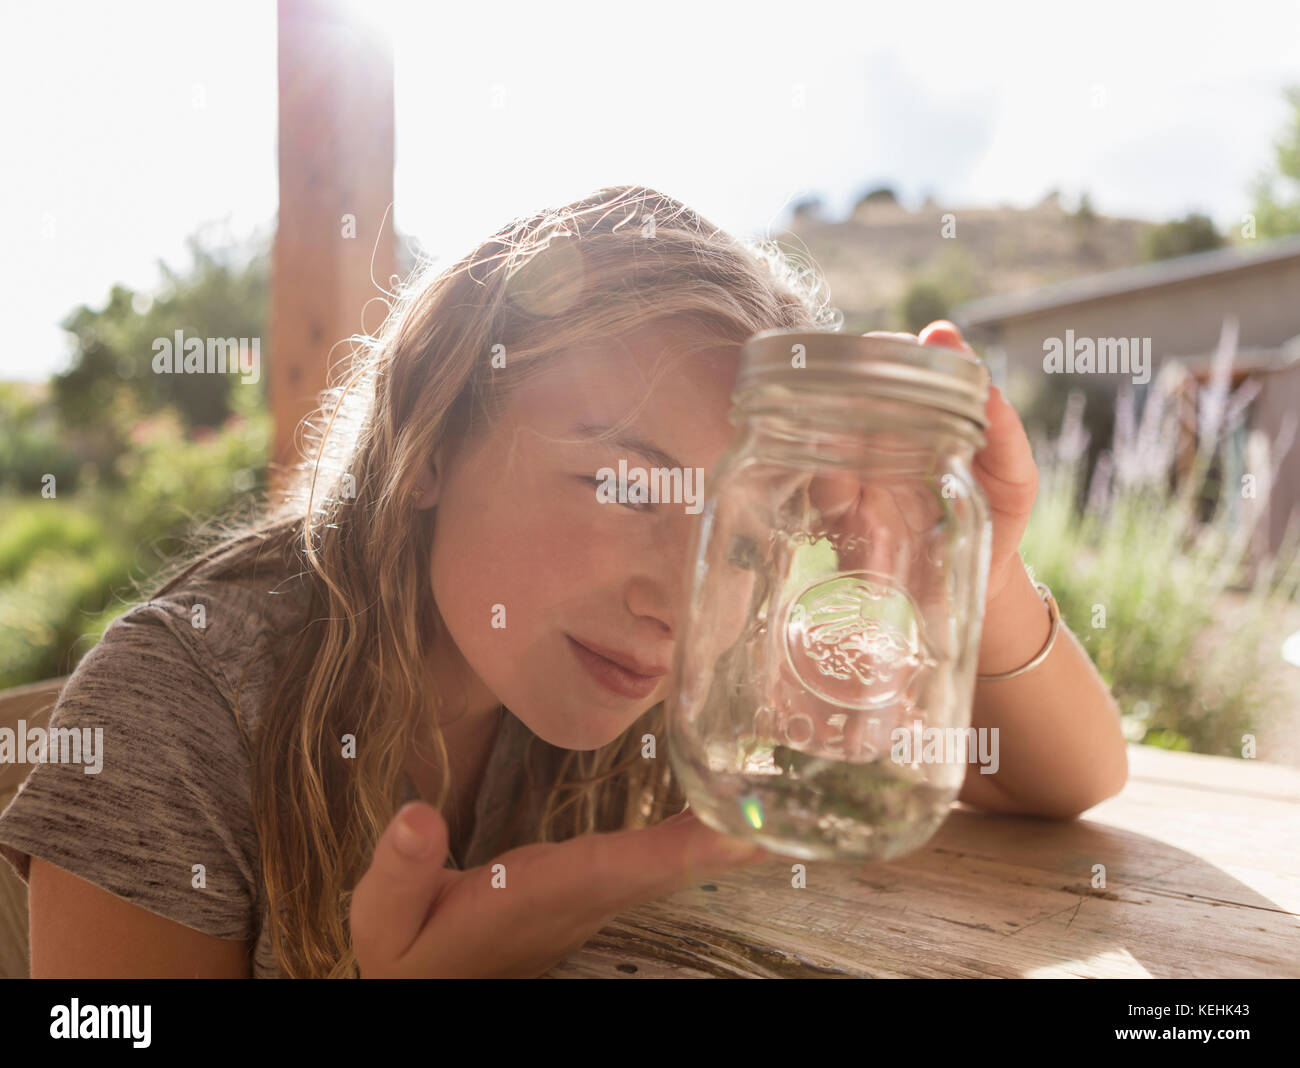 Caucasian girl looking at jar Stock Photo